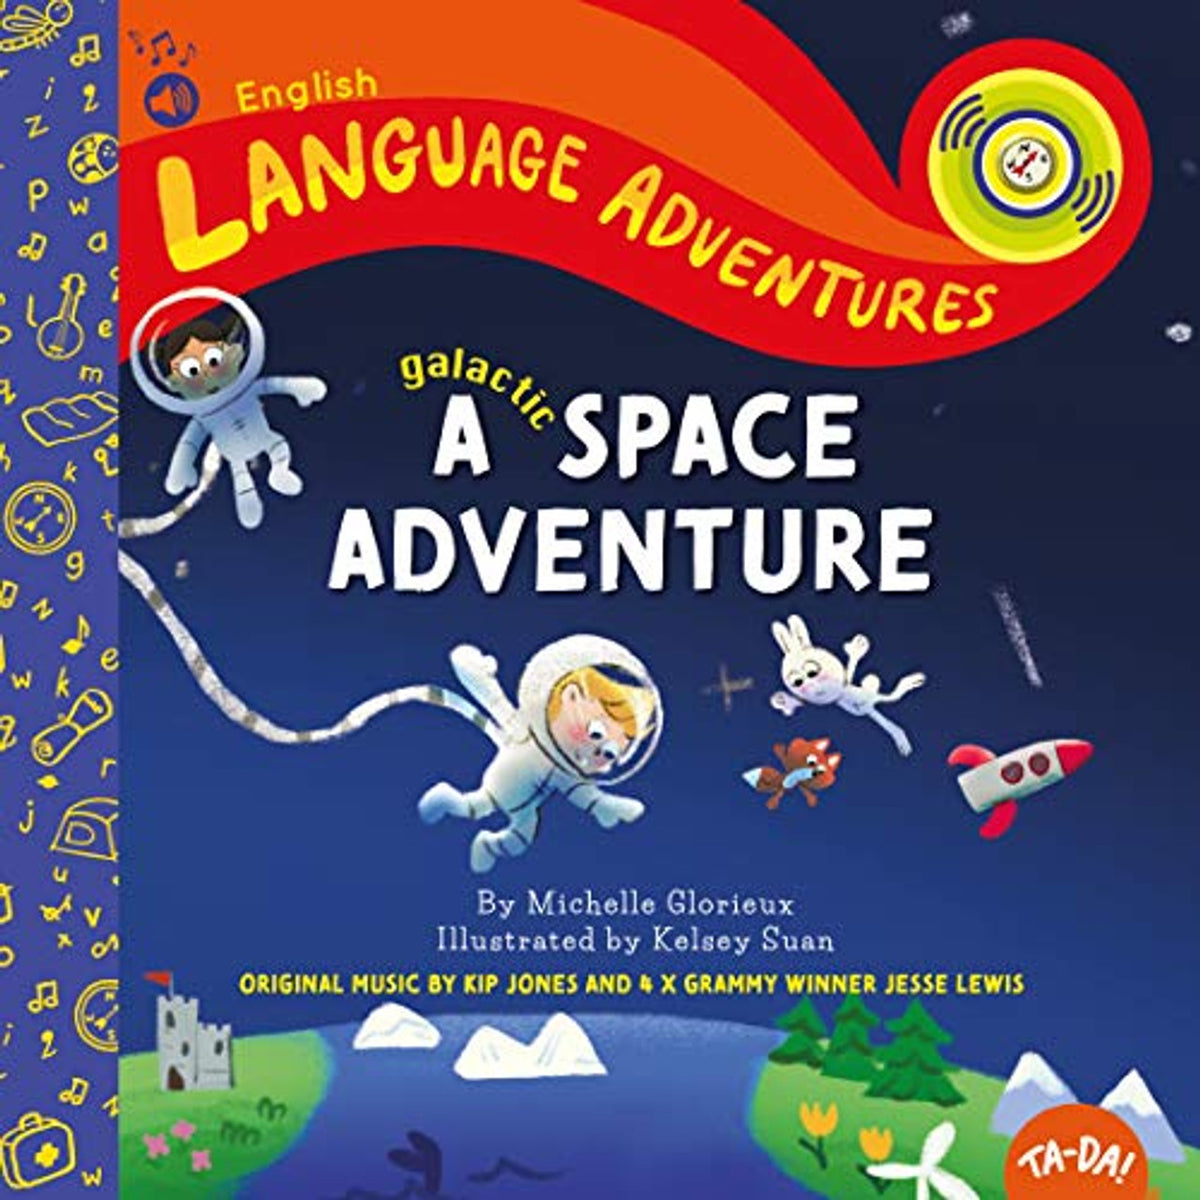 Ta-Da! a Galactic Space Adventure (Language Adventures)